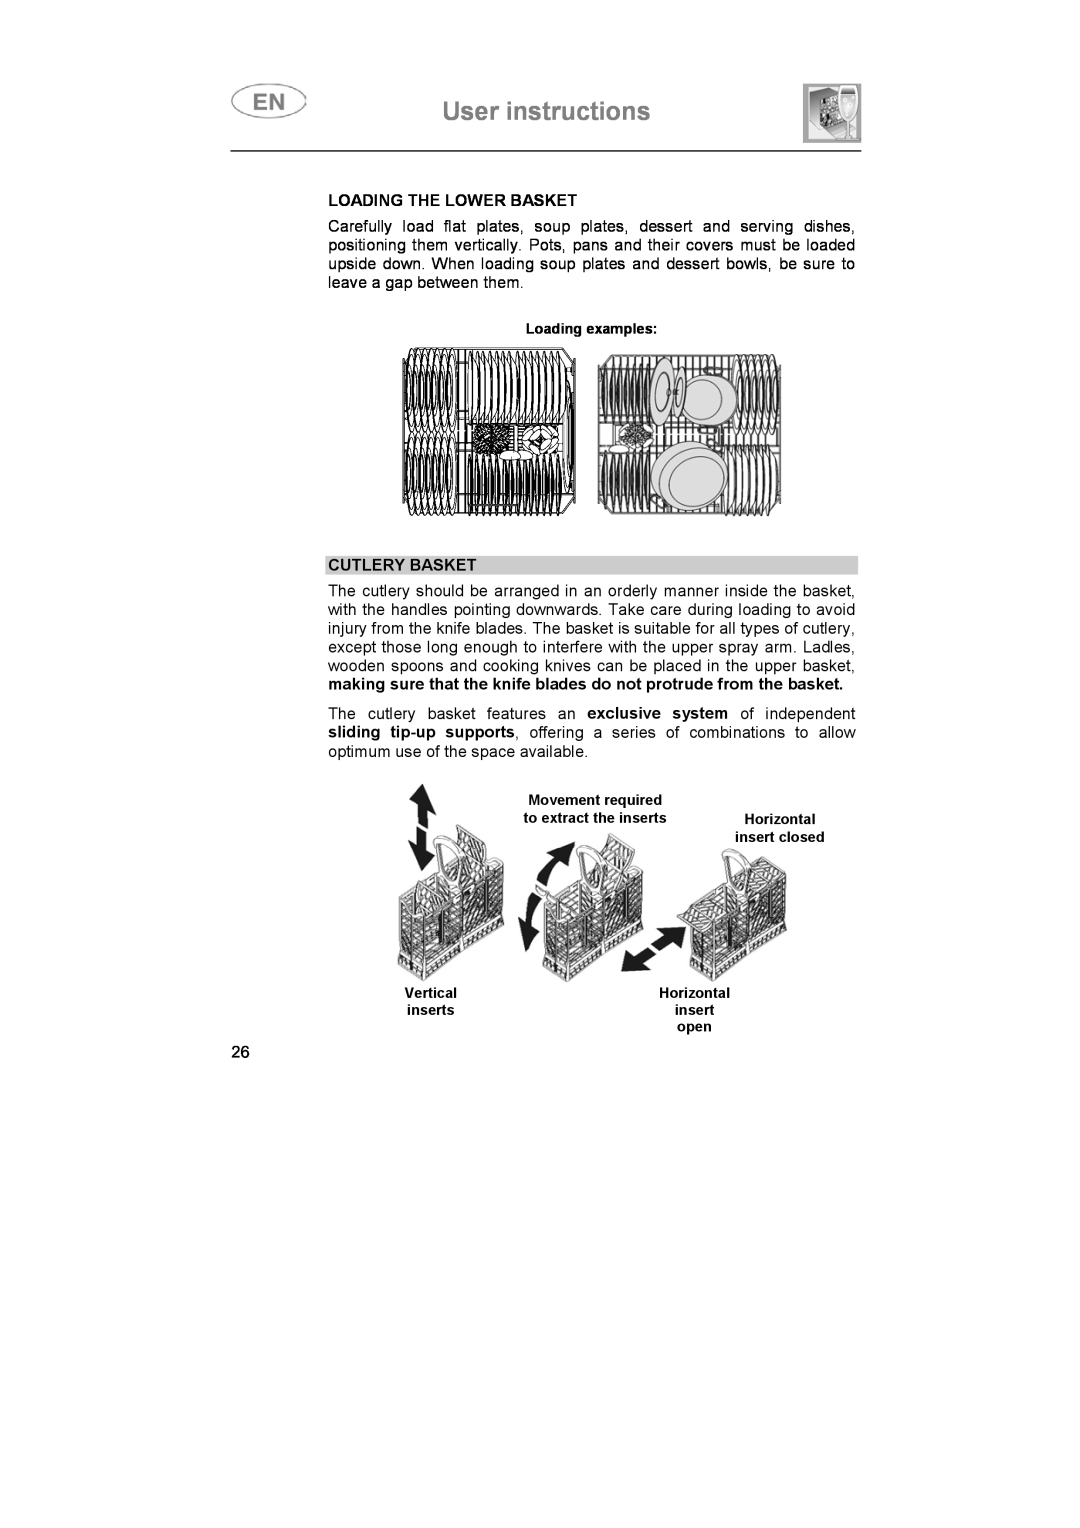 Smeg ST693-1 instruction manual User instructions, Loading The Lower Basket, Cutlery Basket 